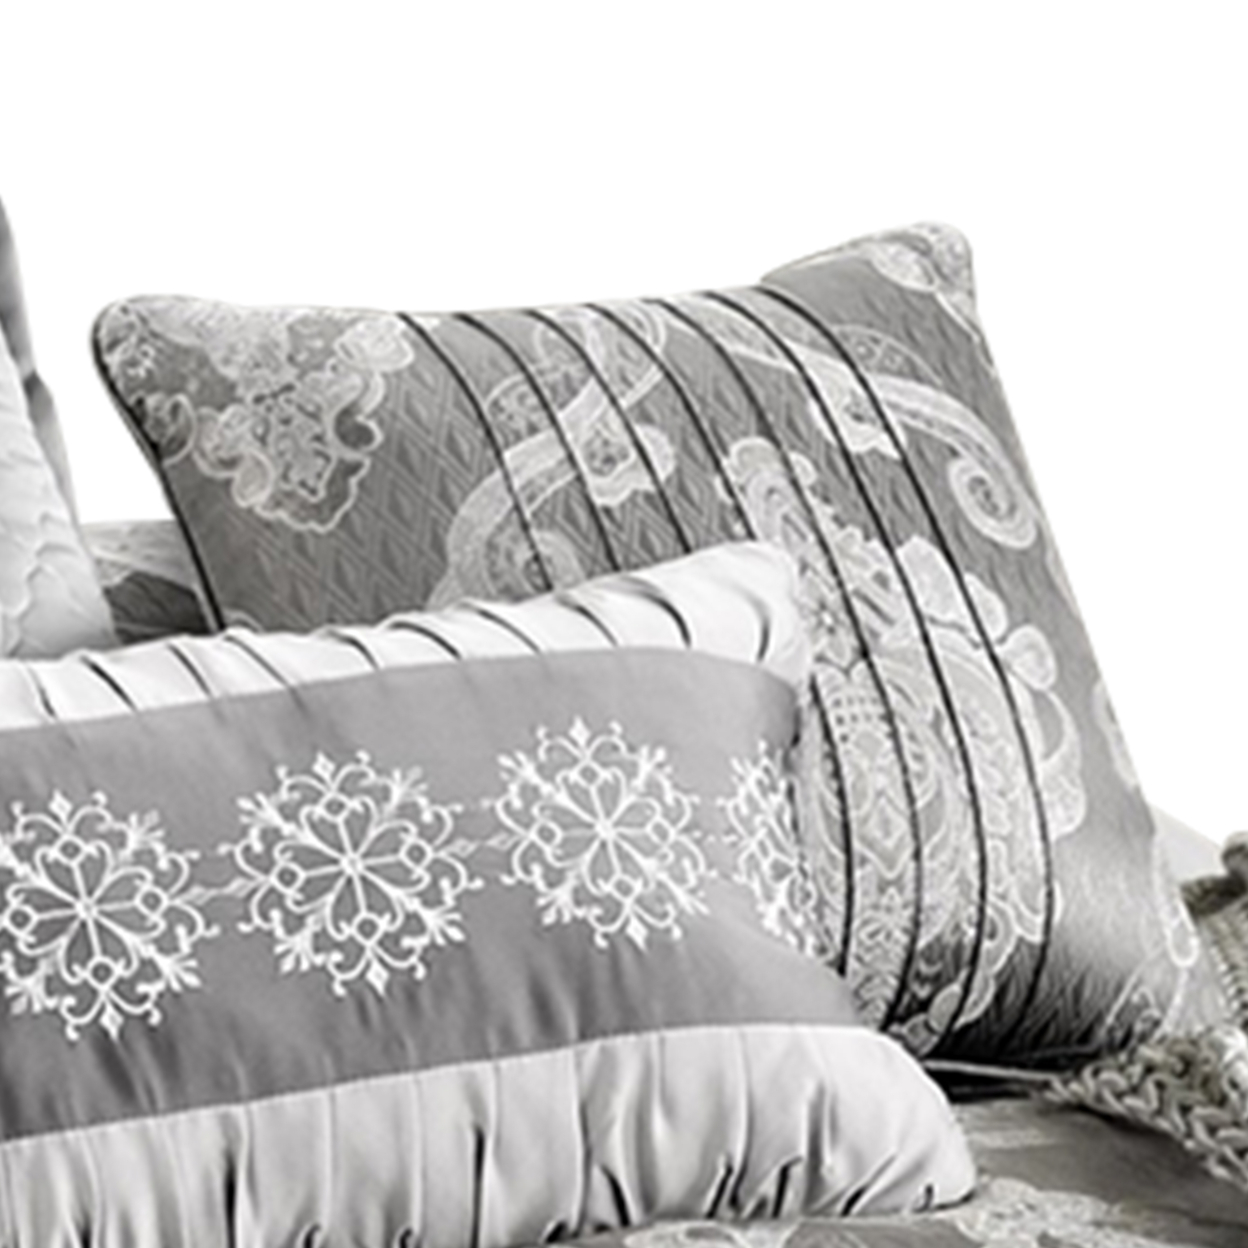 12 Piece Queen Polyester Comforter Set With Medallion Print, Platinum Gray- Saltoro Sherpi